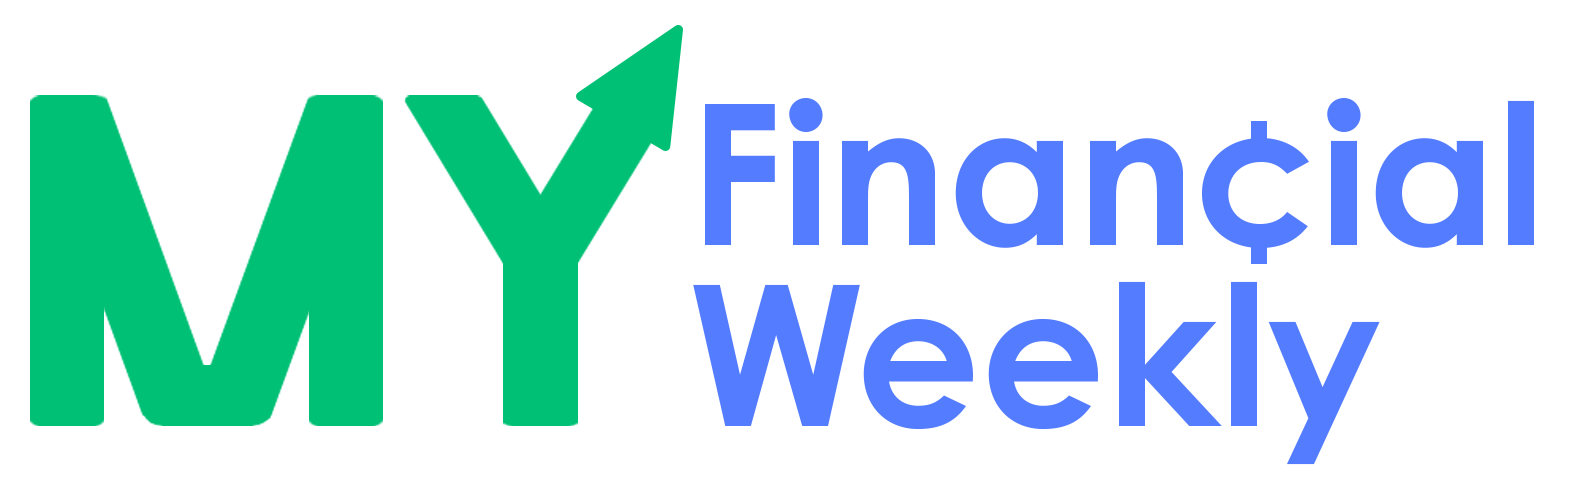 My Financial Weekly logo